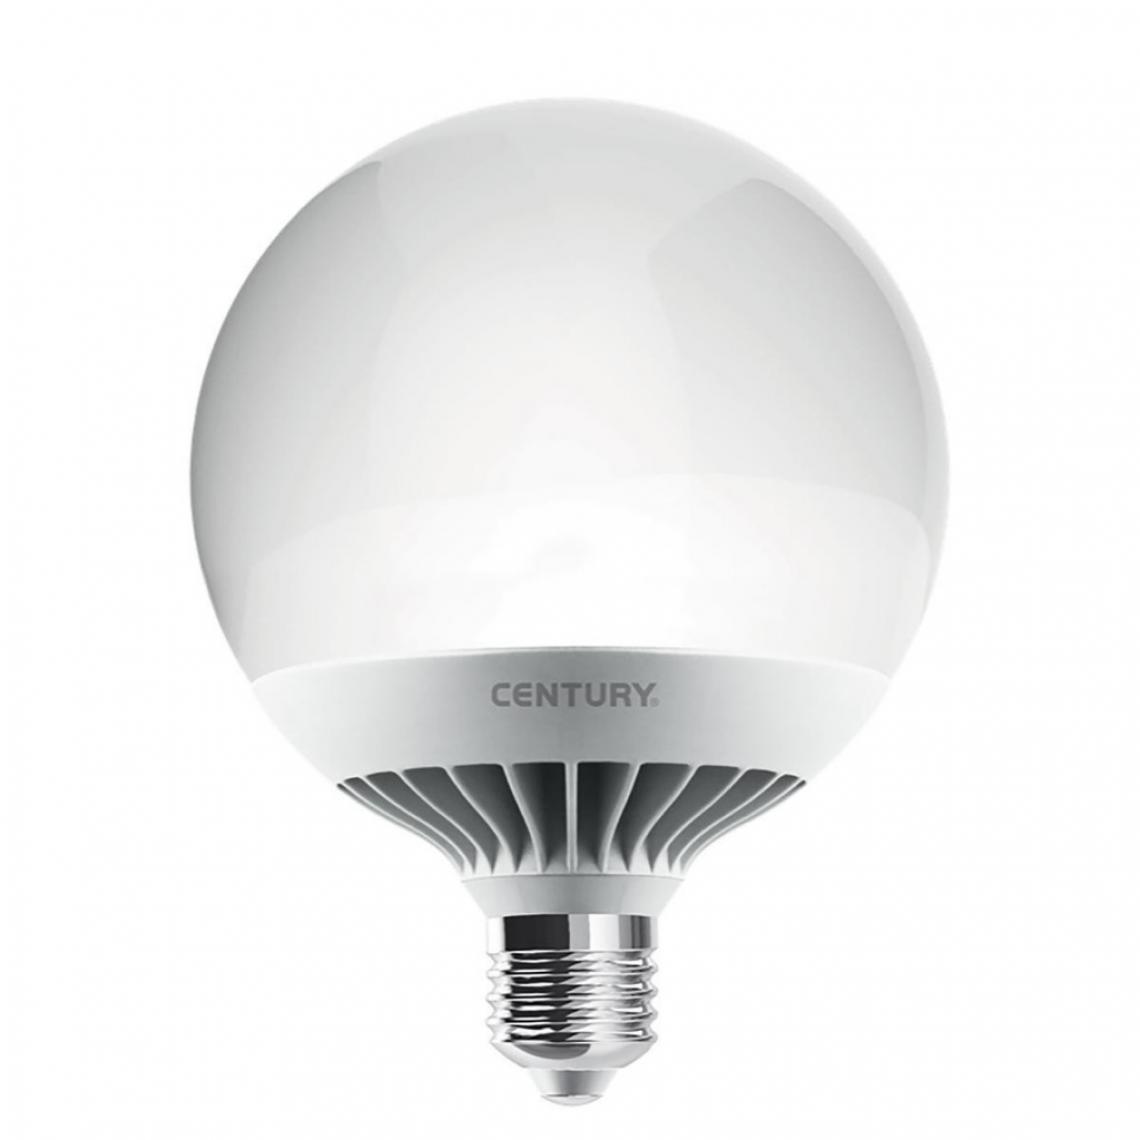 Alpexe - Ampoule LED E27 Globe 20 W 1800 lm 3000 K - Ampoules LED